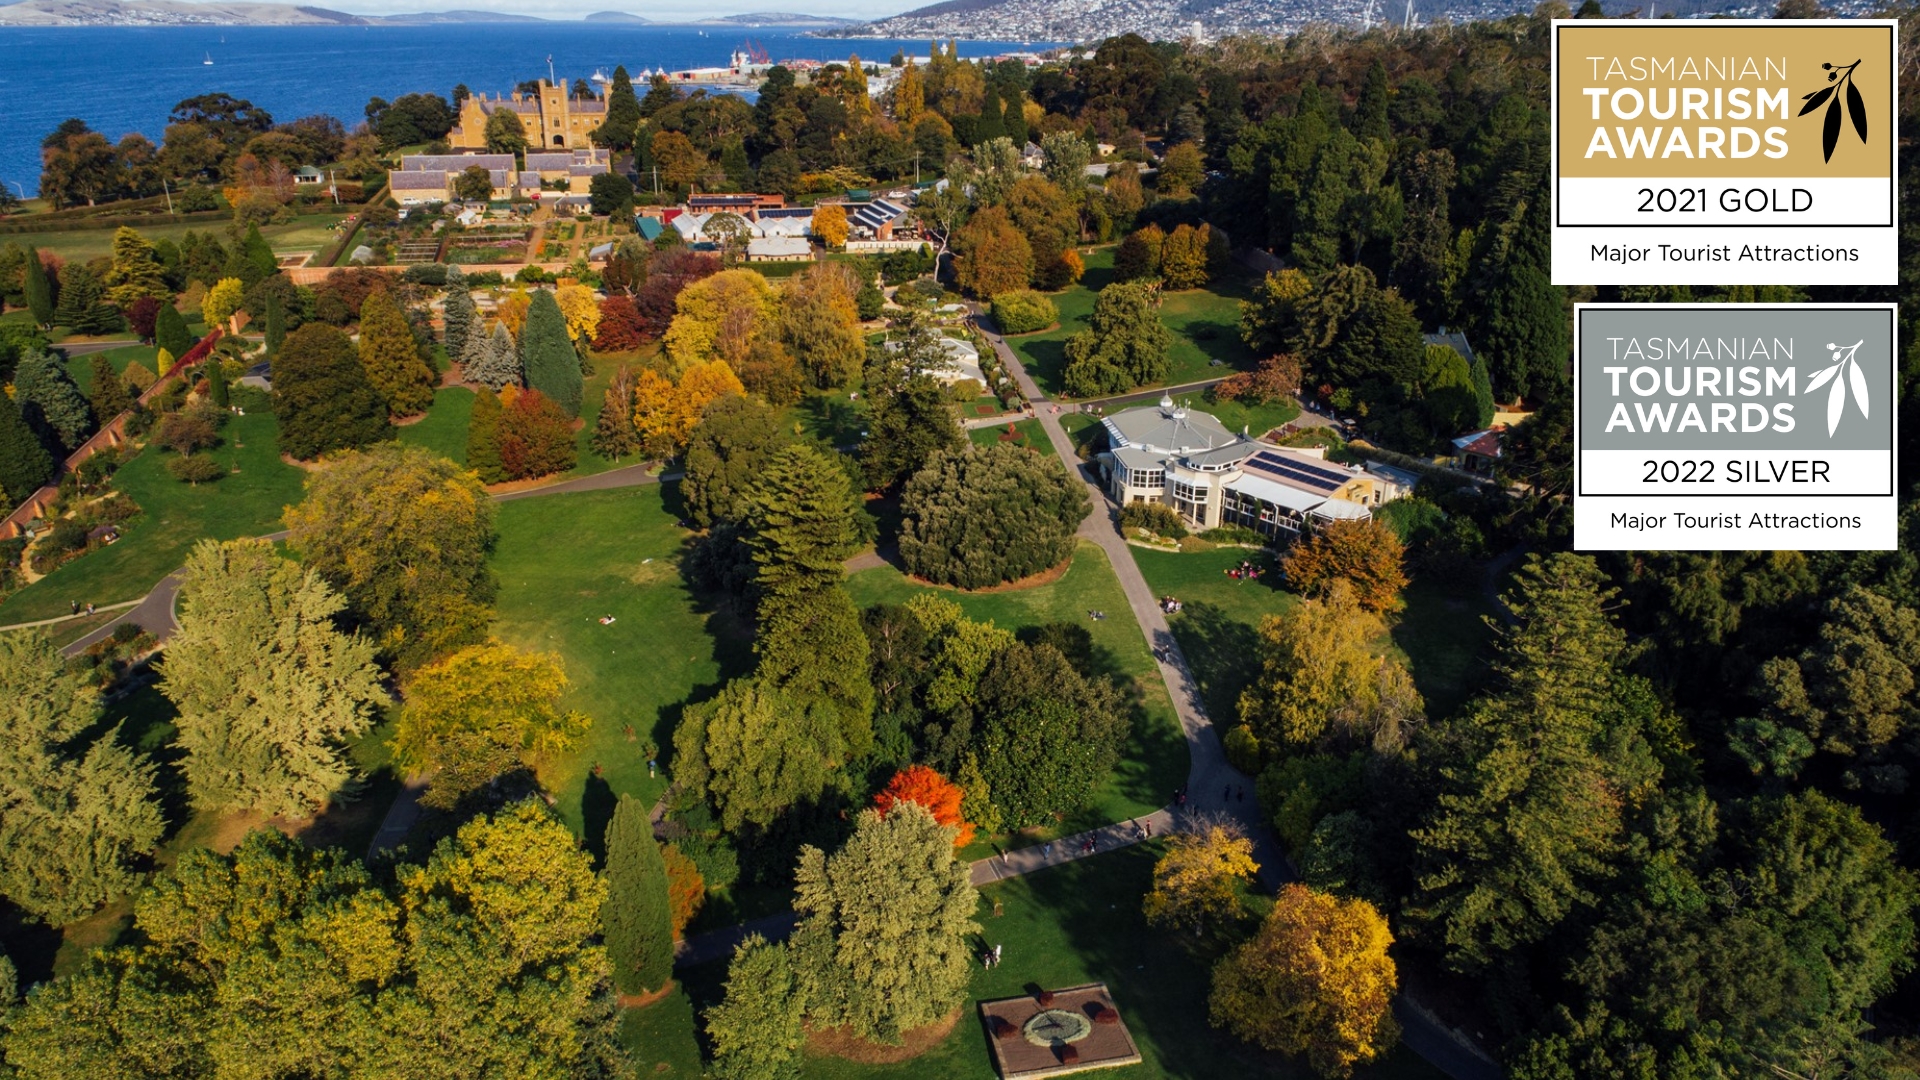 Royal Tasmanian Botanic Gardens